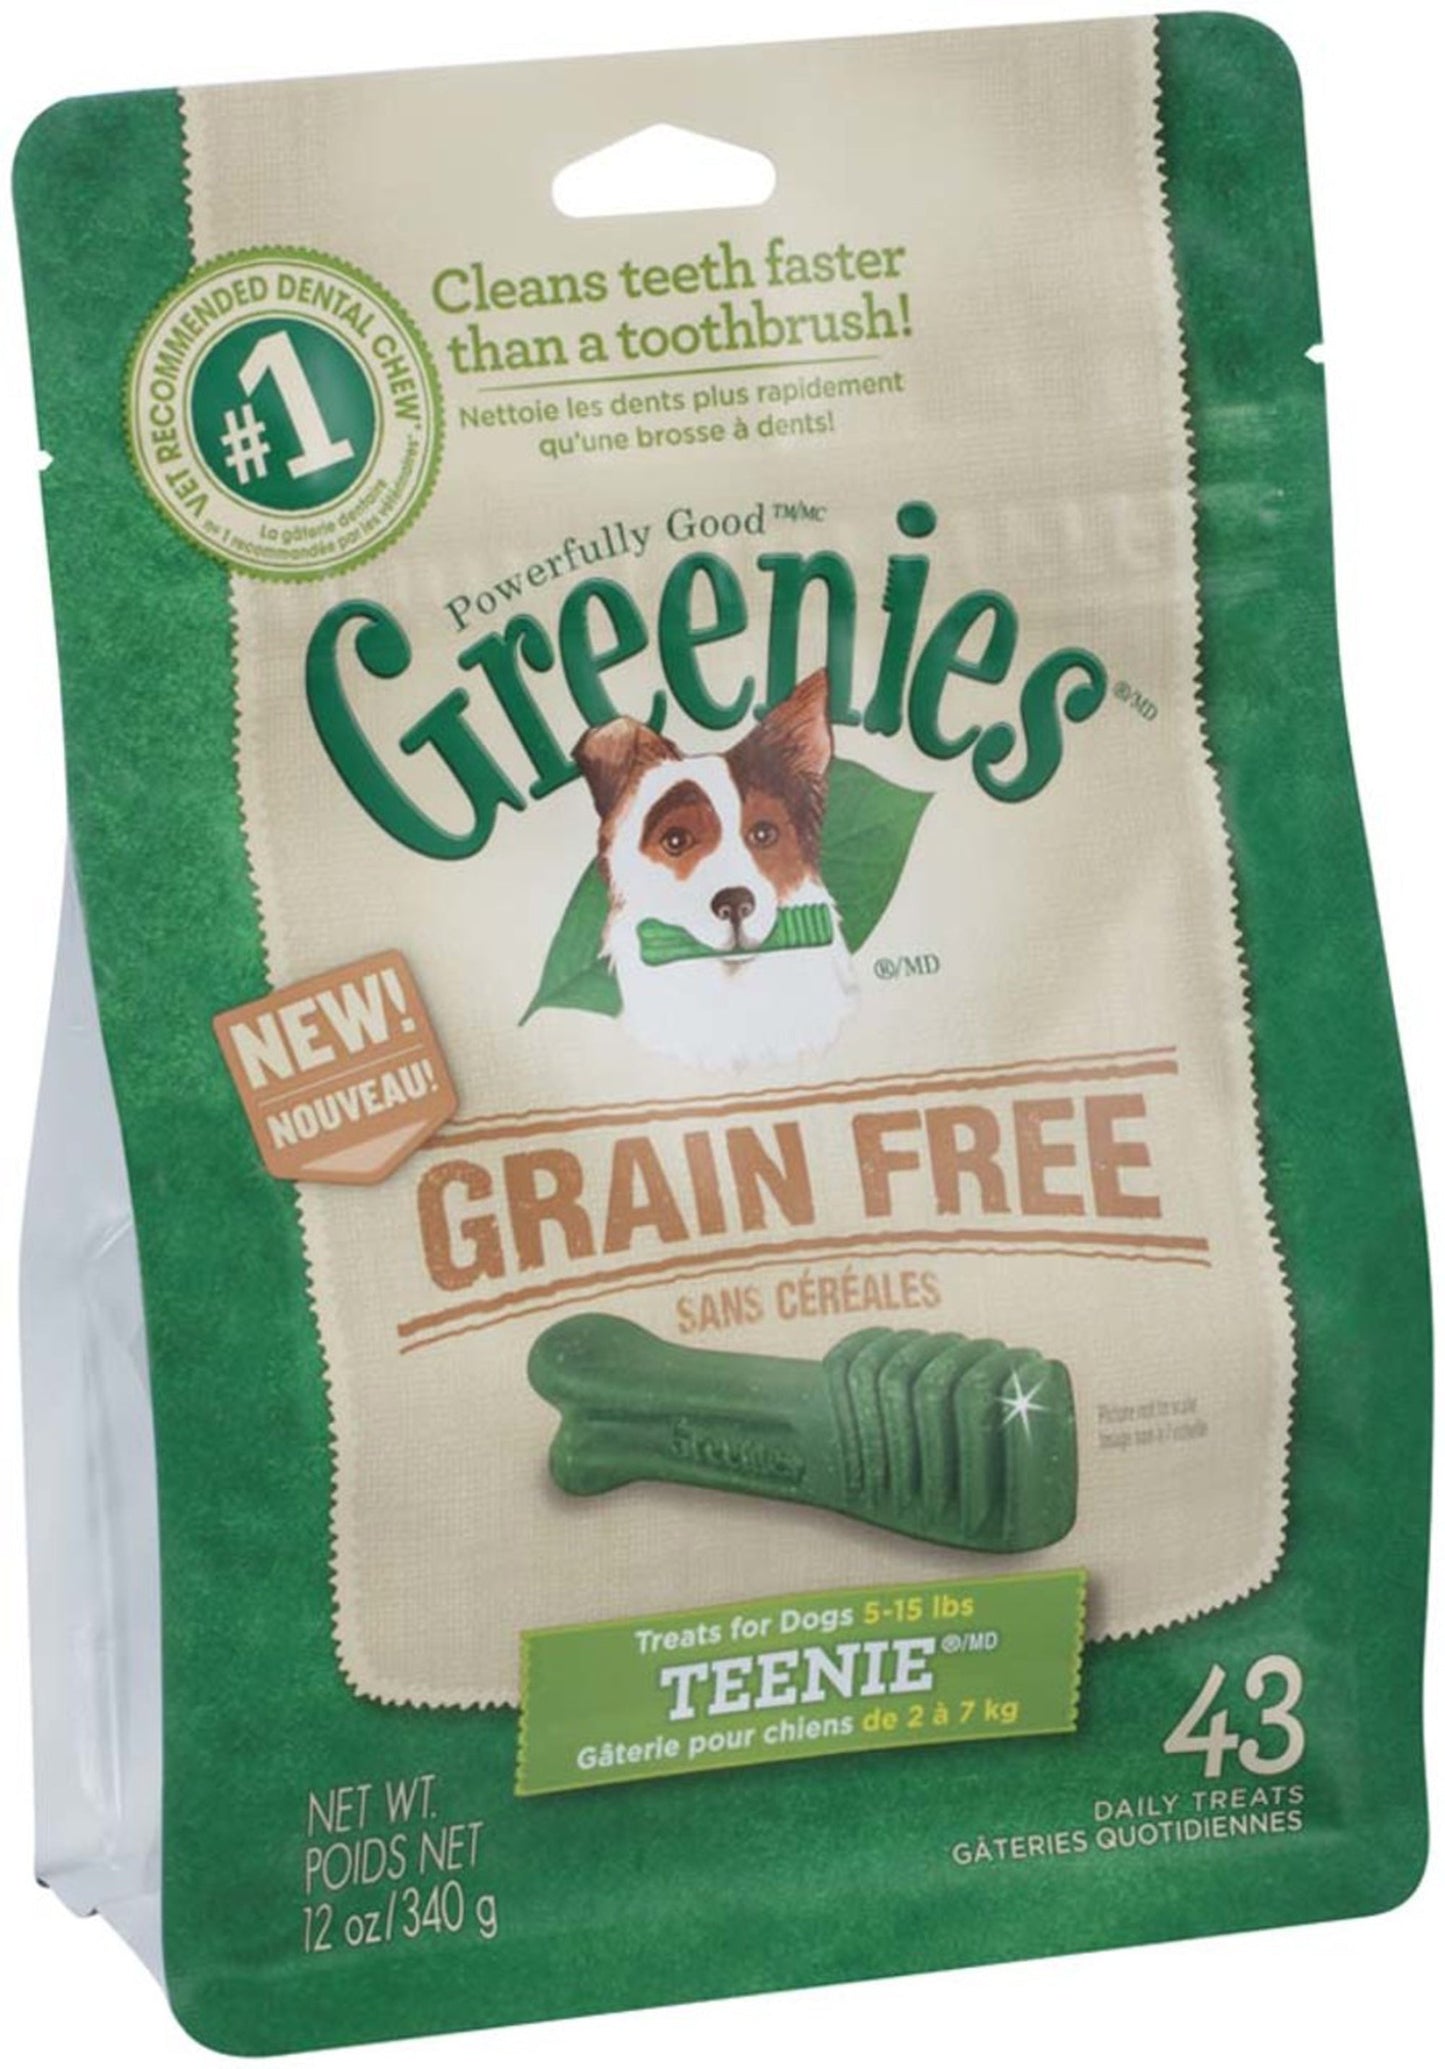 Greenies Grain Free Dog Dental Treats Teenie Original 1ea/12 oz, 43 ct